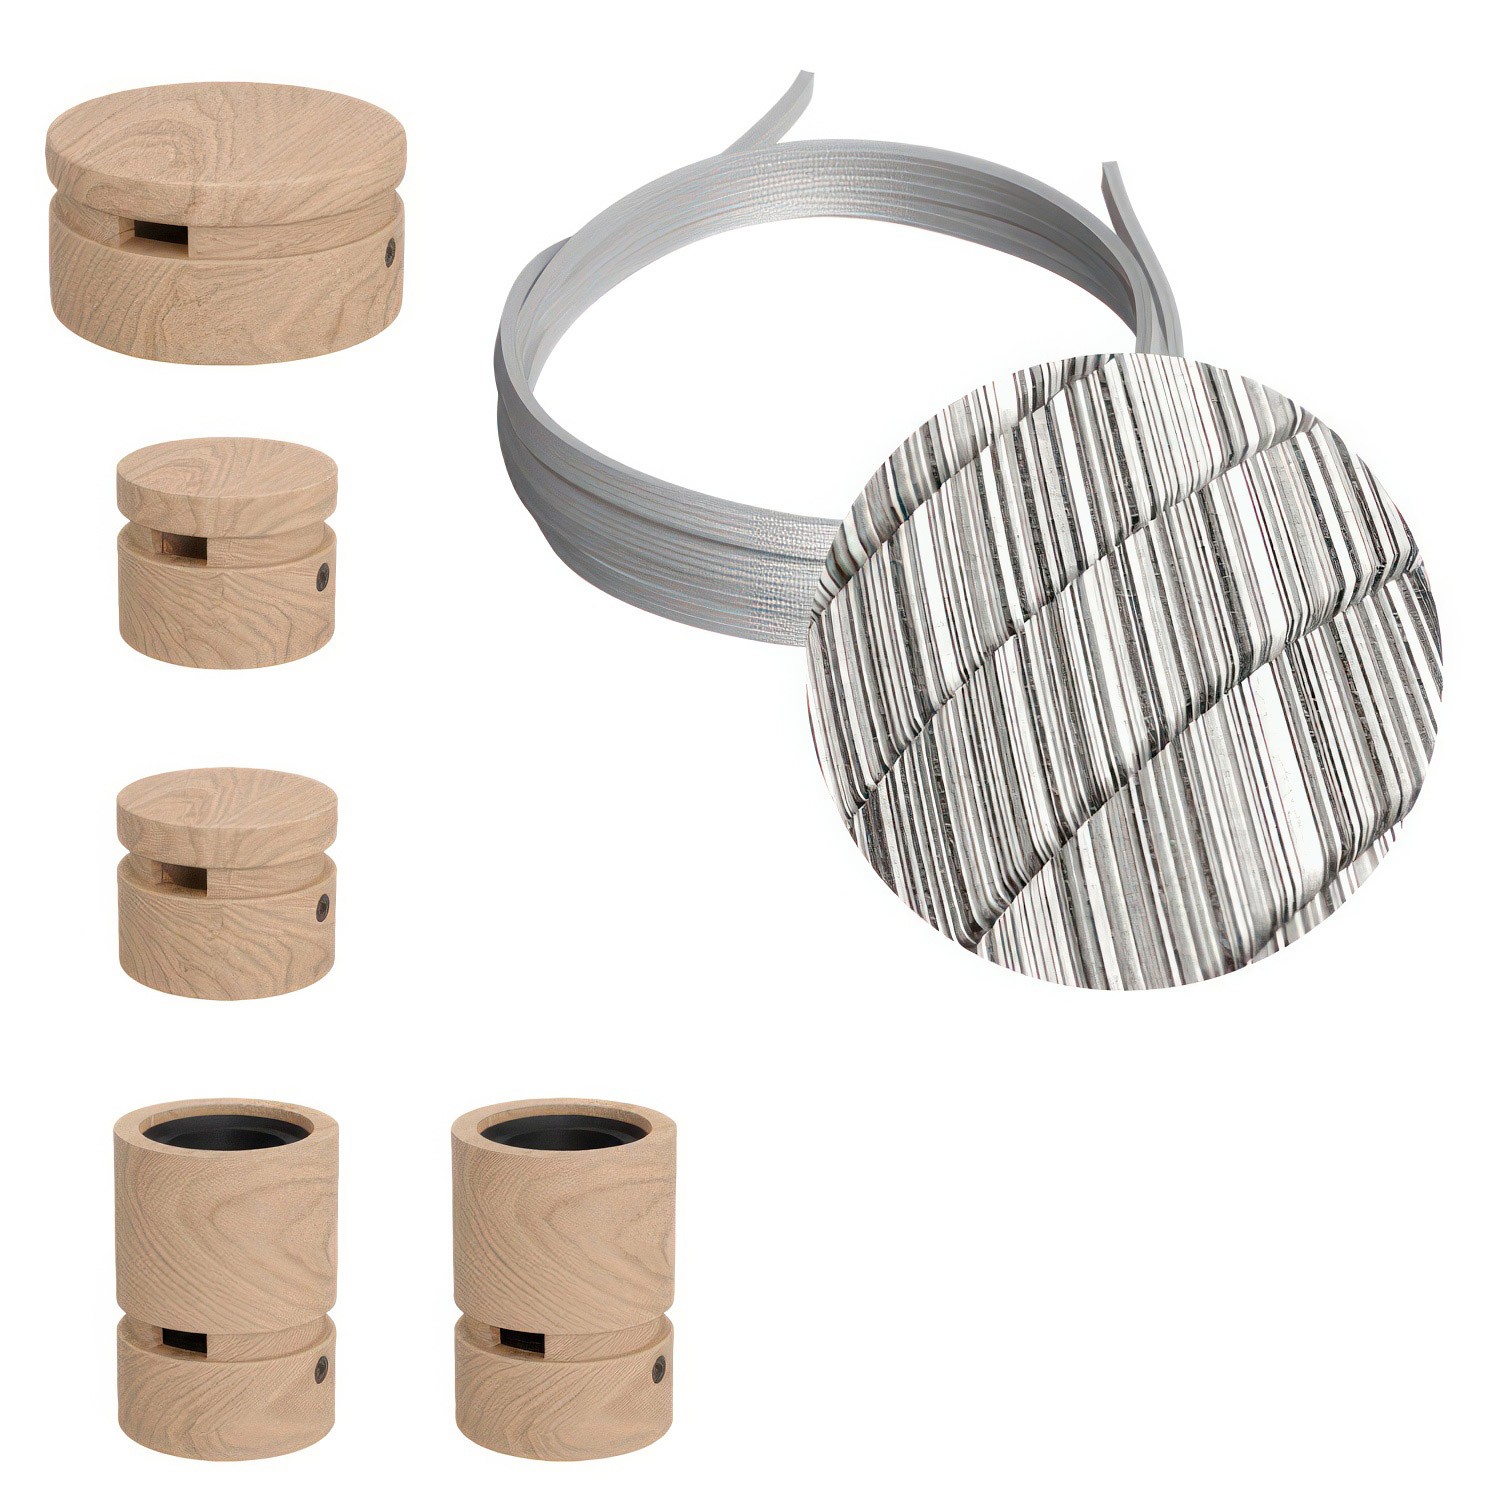 Kit Wiggle Filé System - con 3m cable textil guirnalda y 5 accesorios de madera